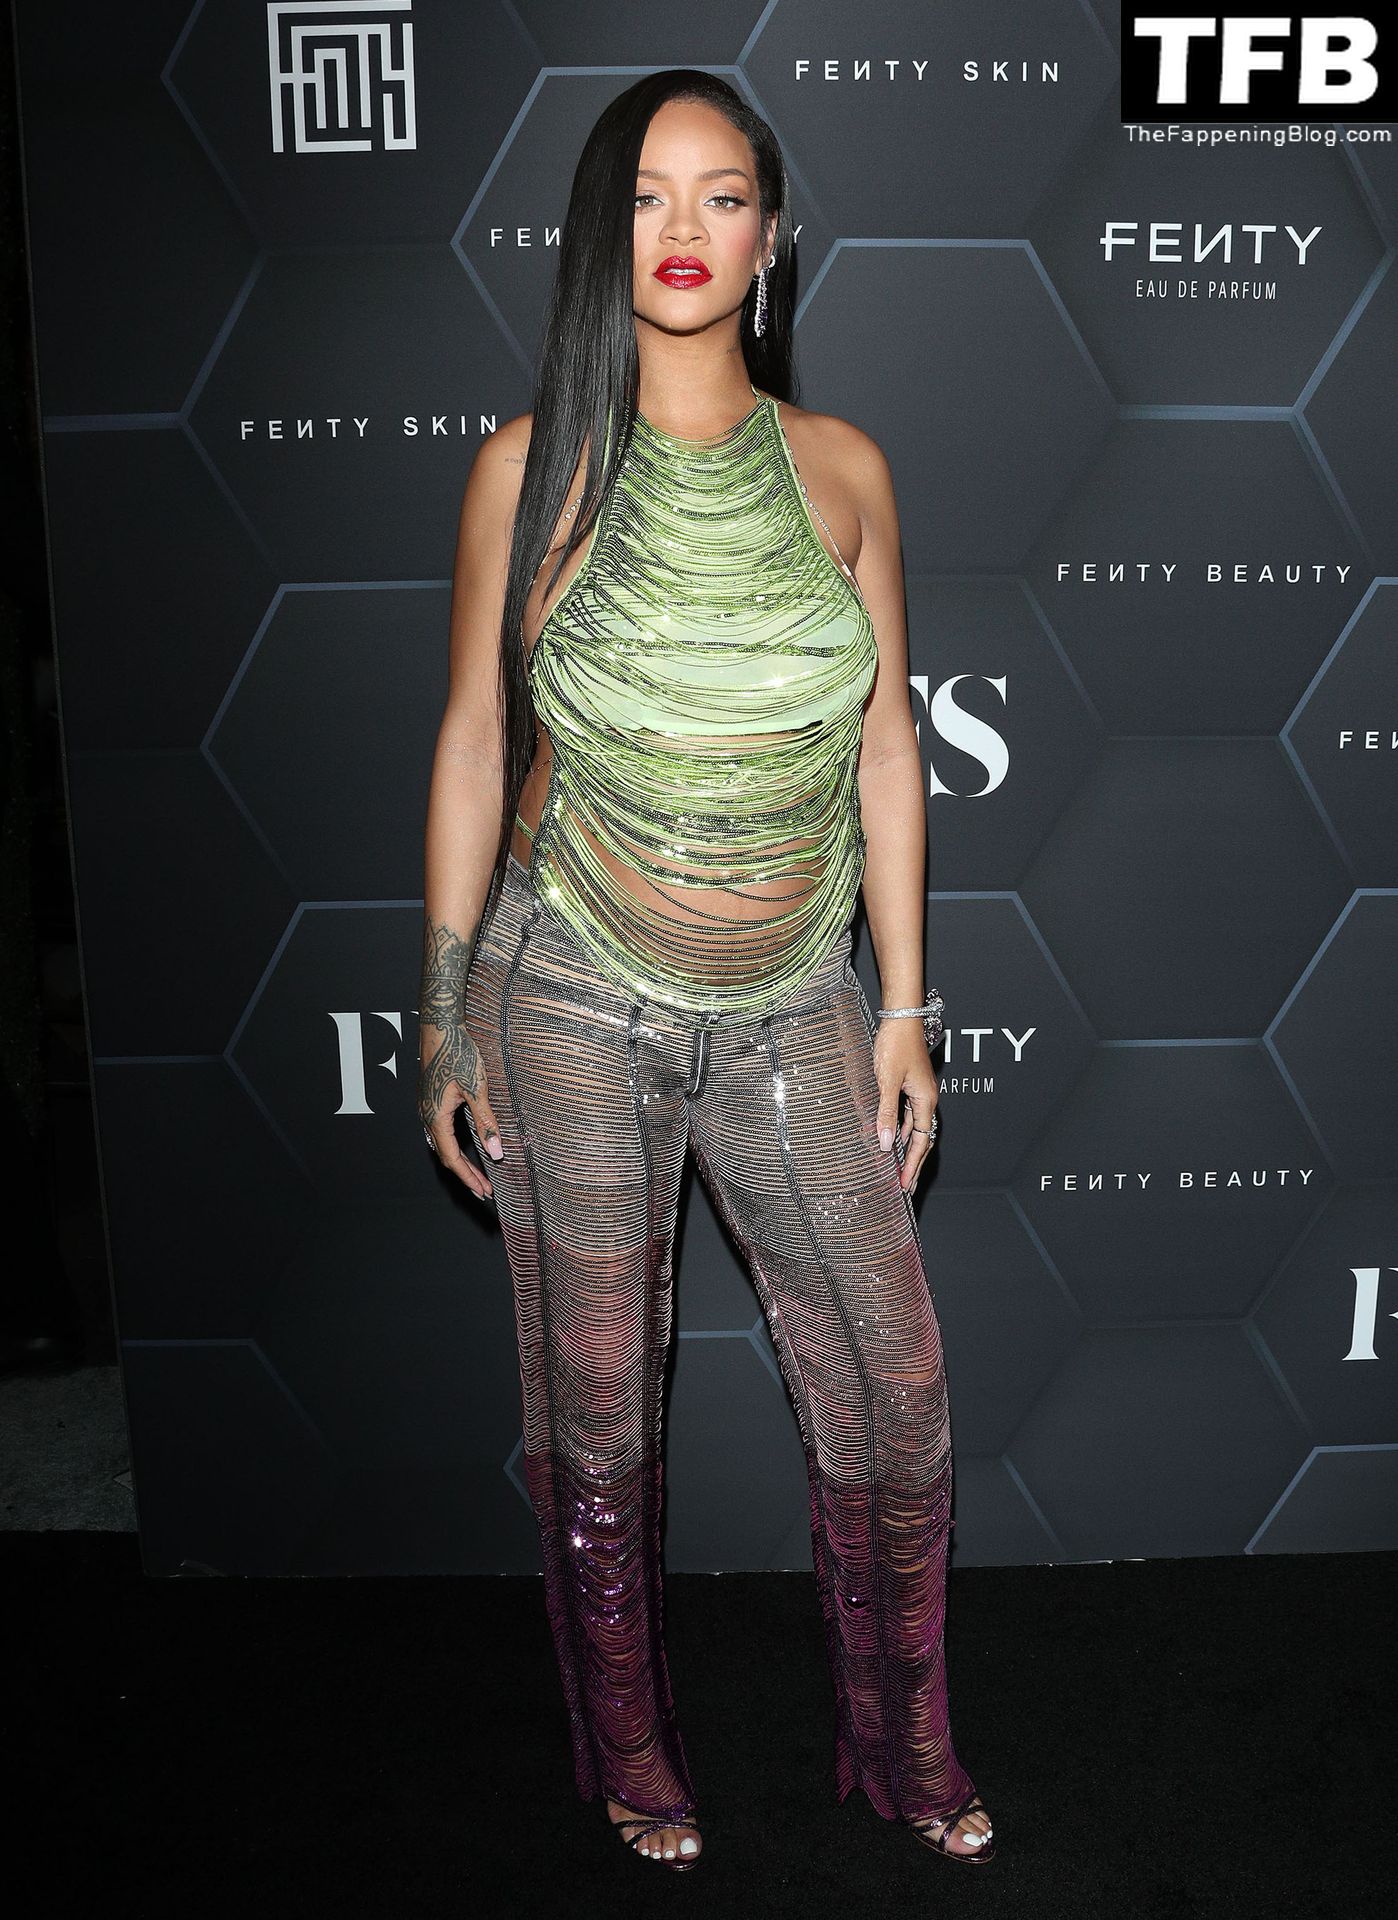 Rihanna-Sexy-The-Fappening-Blog-153.jpg